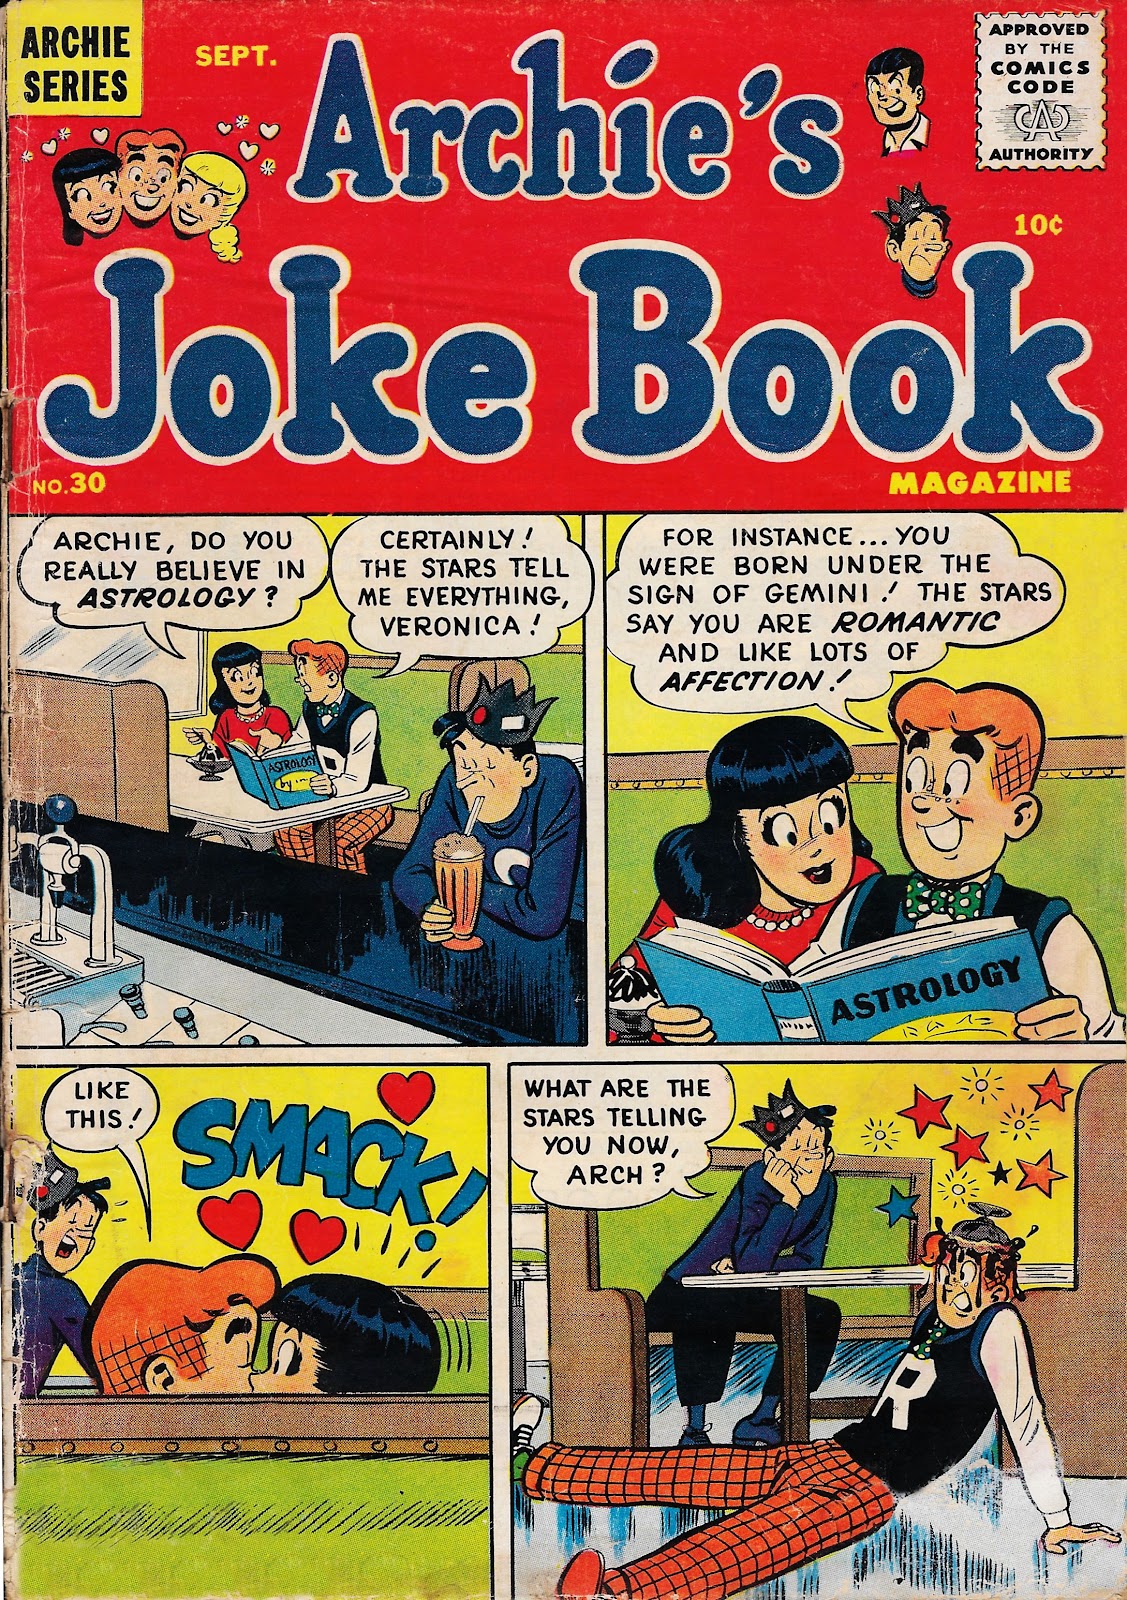 Archie's Joke Book Magazine issue 30 - Page 1